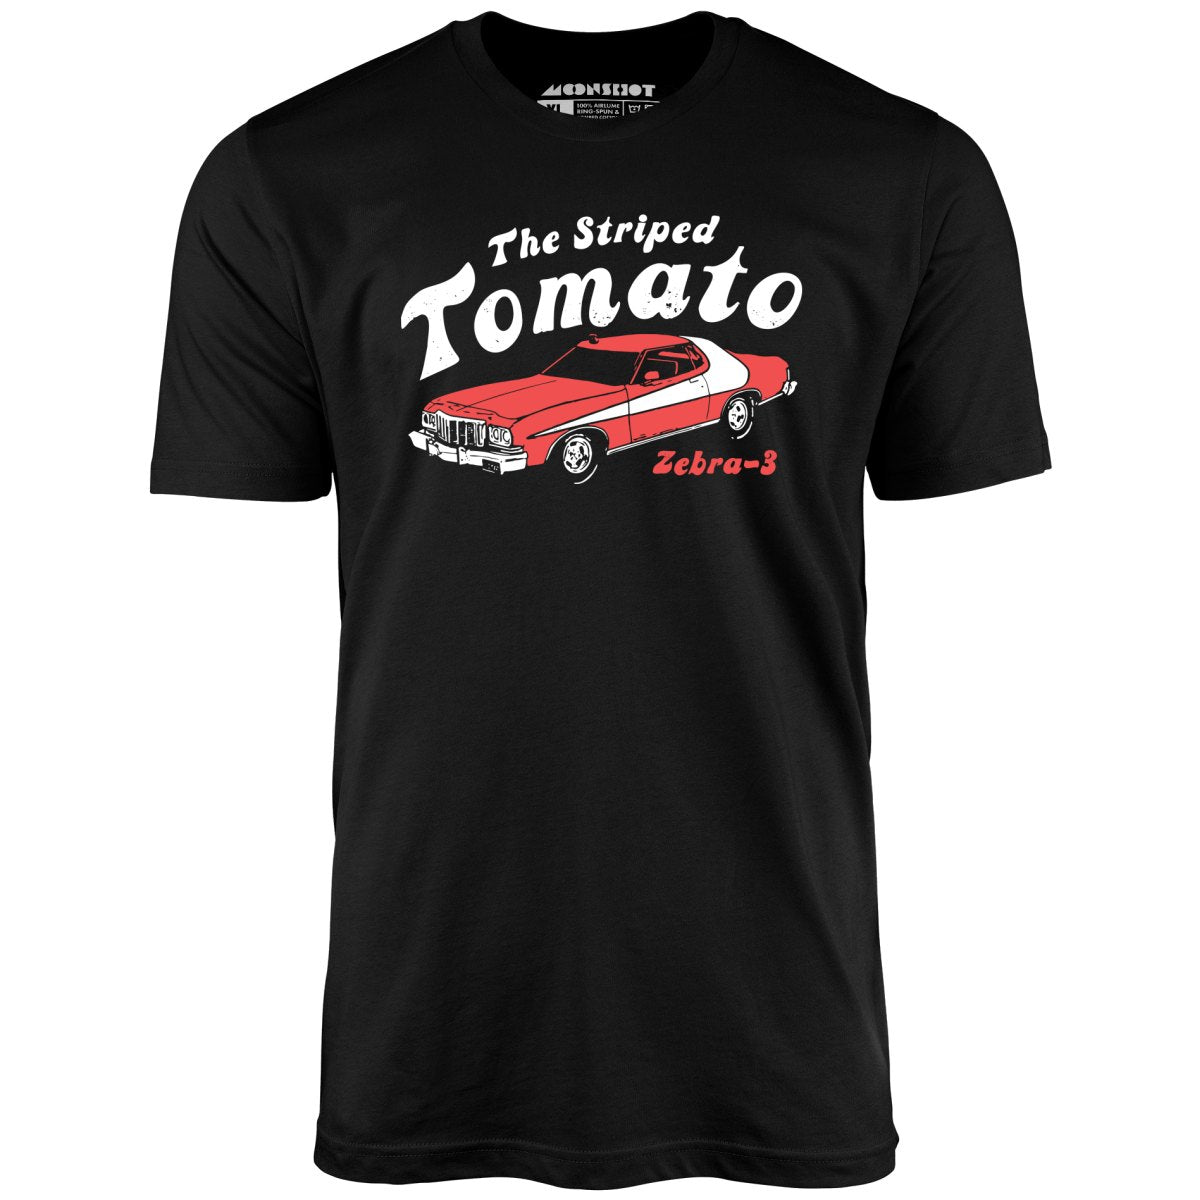 The Striped Tomato - Unisex T-Shirt